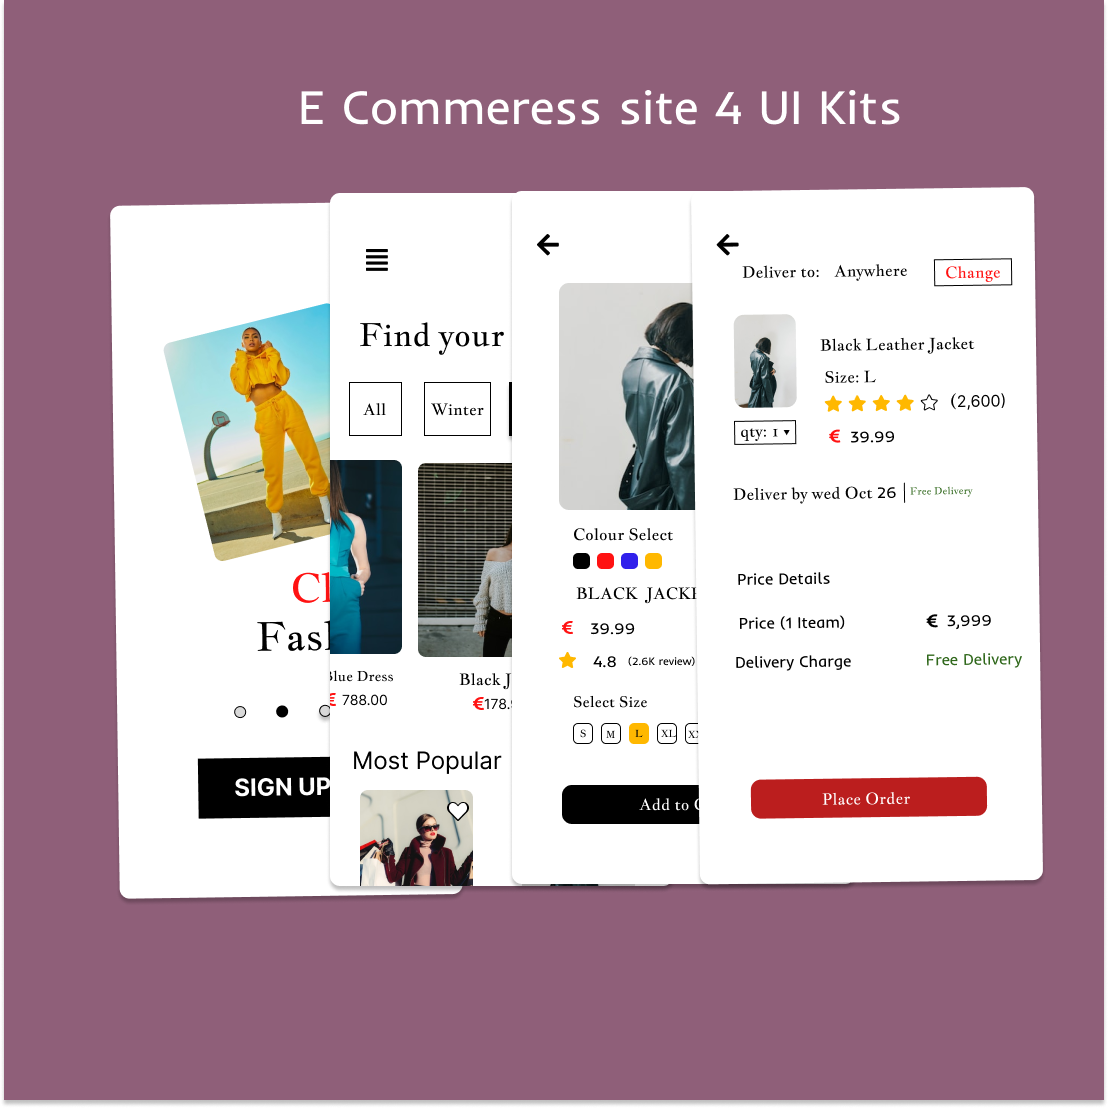 E-commerce UI Kits cover image.